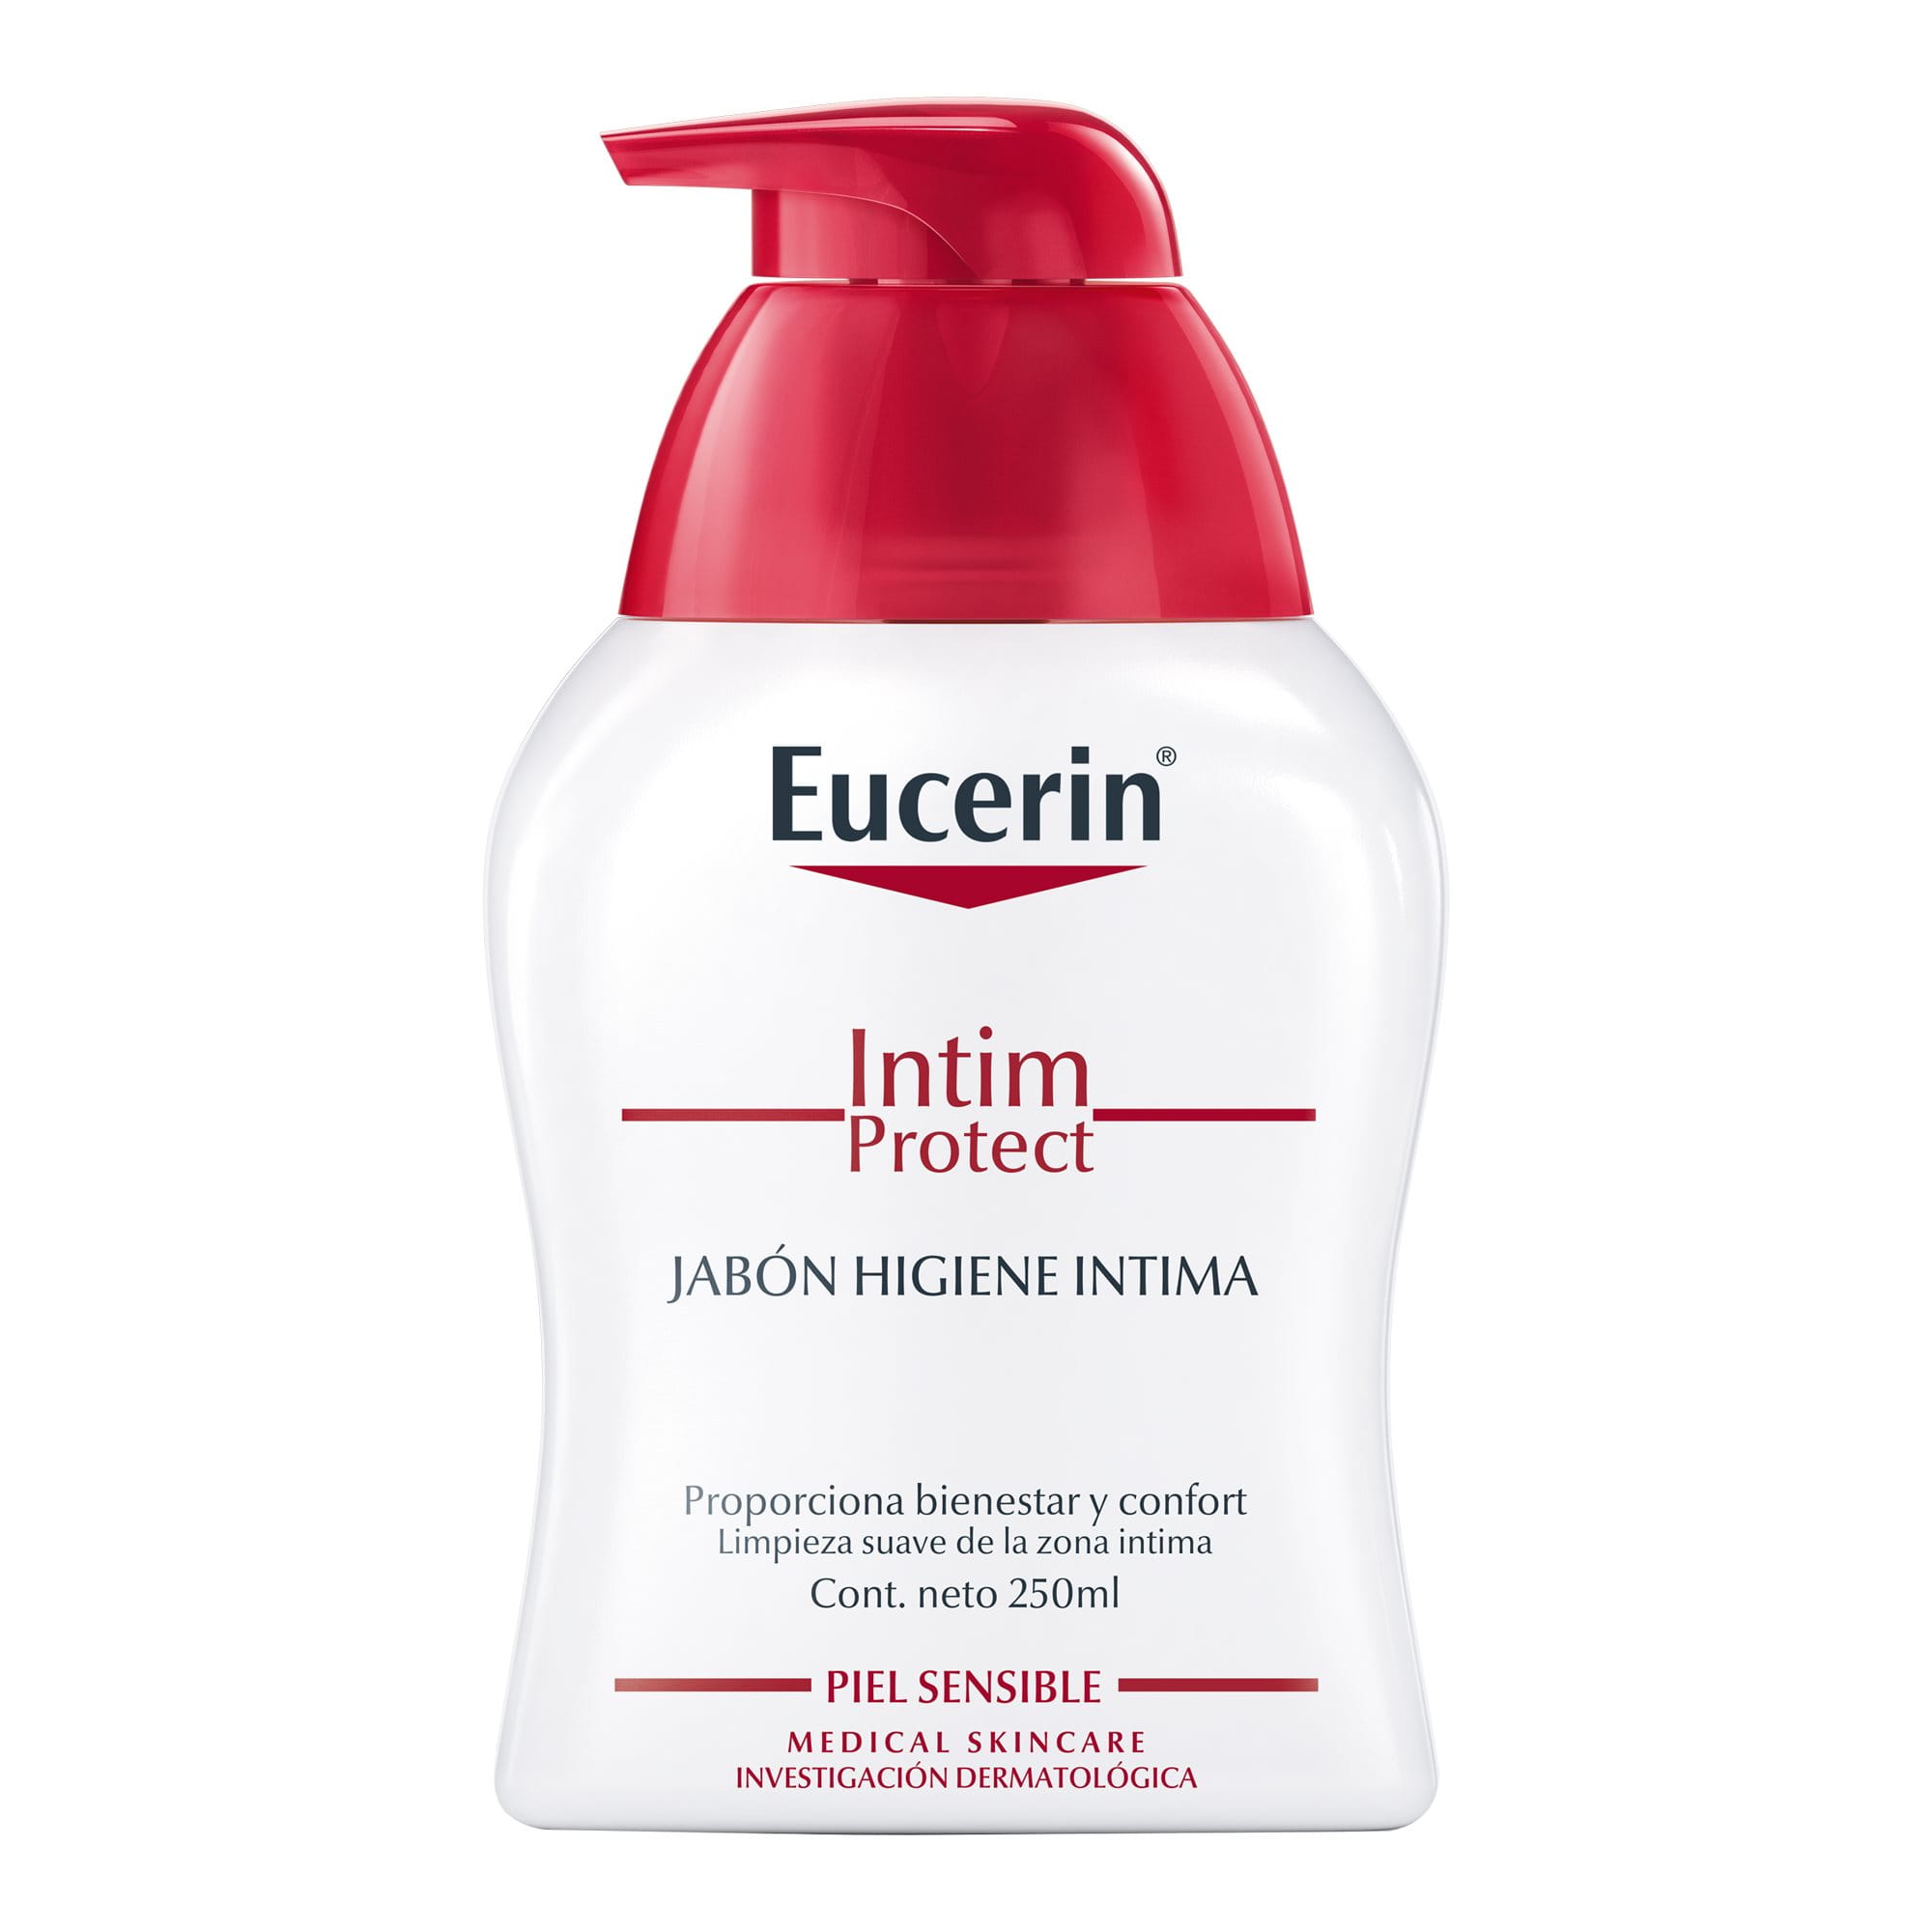 63095_Eucerin-Jabon-Higiene-intima_packshot